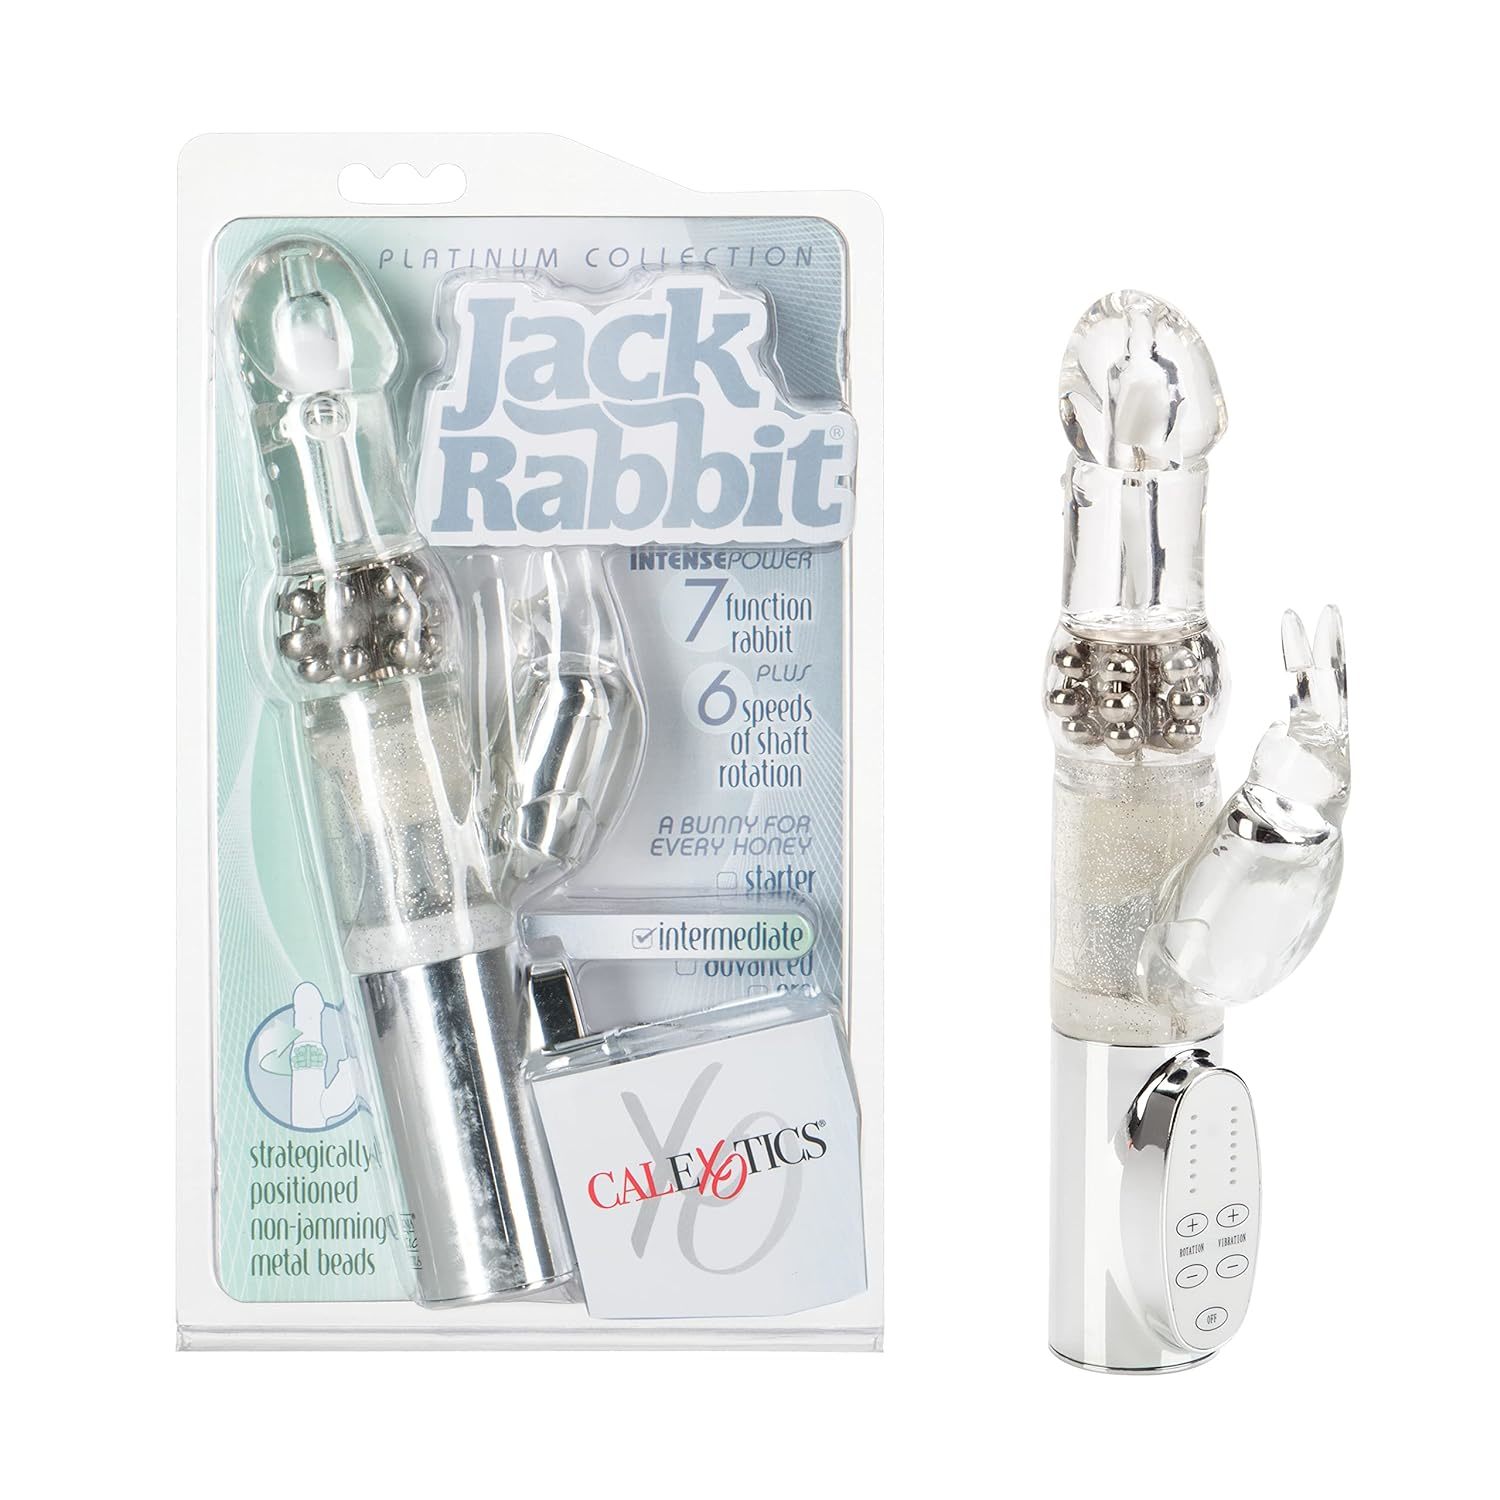 7-Function Platinum Jack Rabbit Vibrator With Rotation - Waterproof Vibe Sex Toy - $81.99